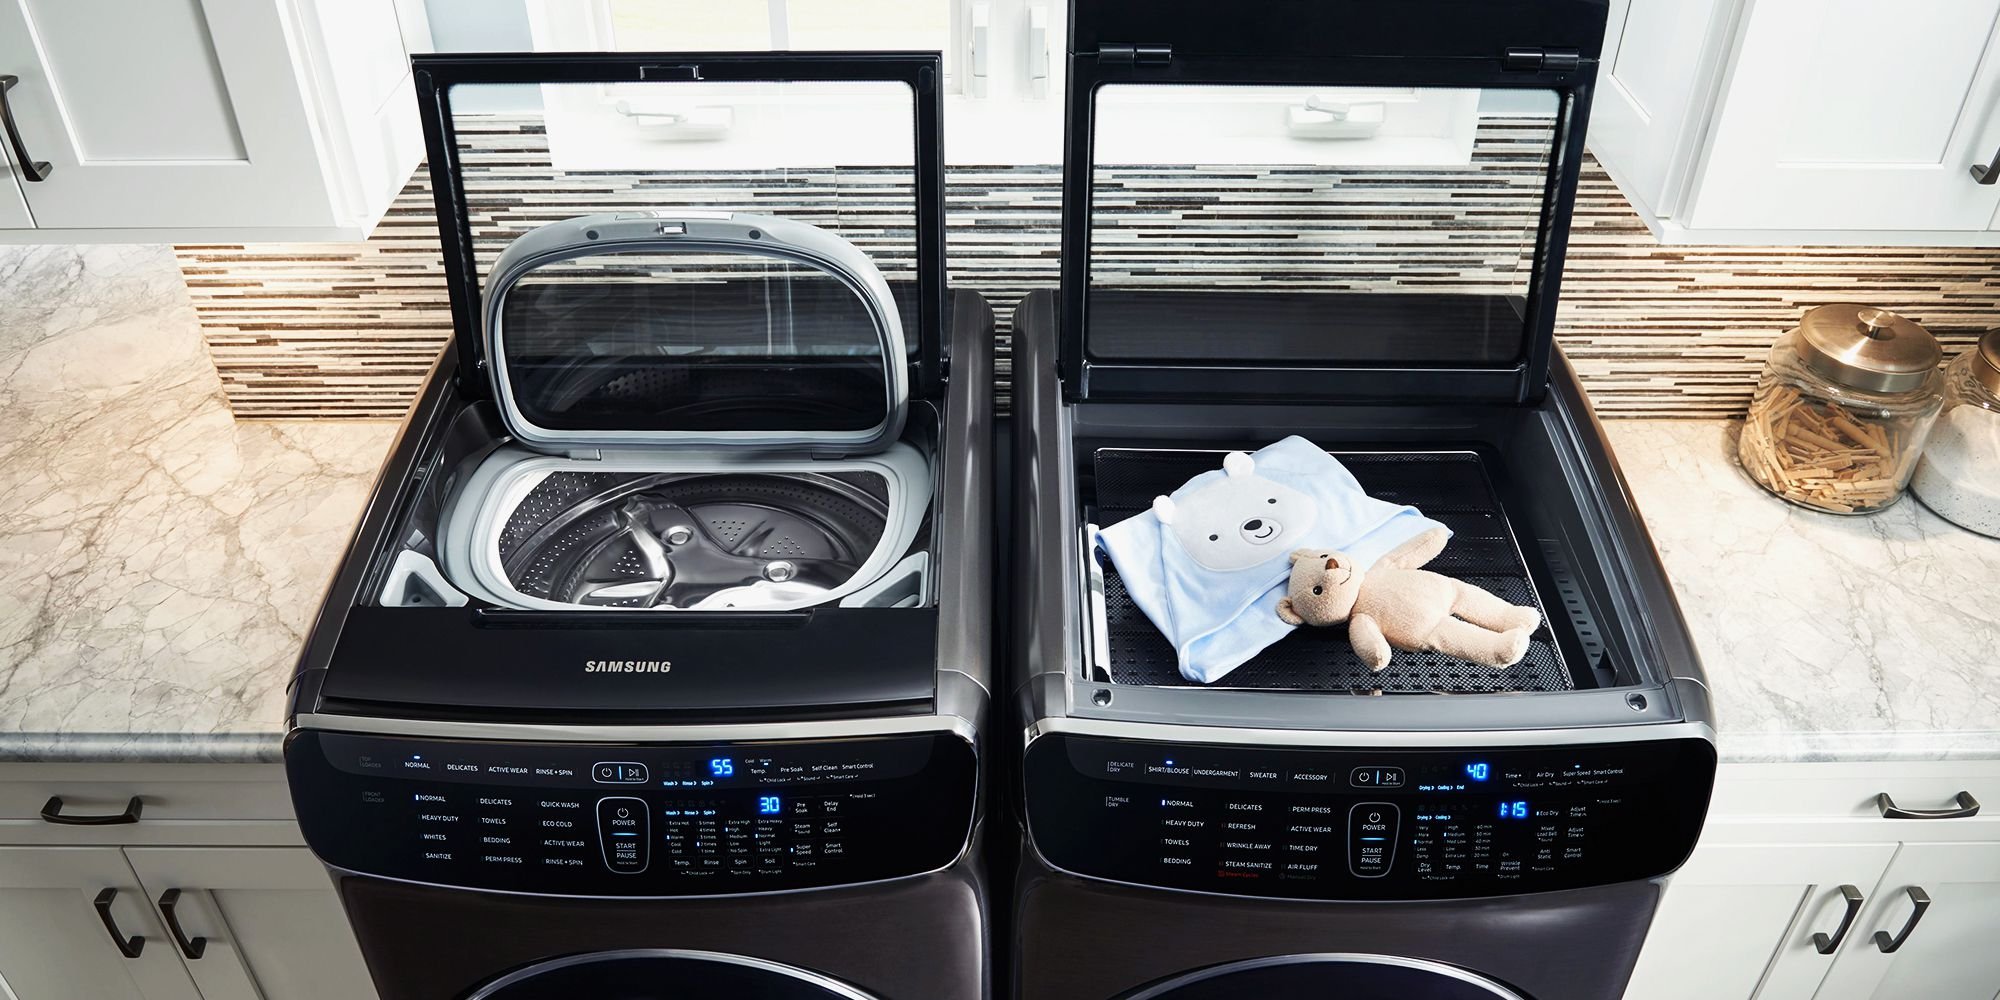 Waterless Washing Machines - The Washing Technologies in the Future